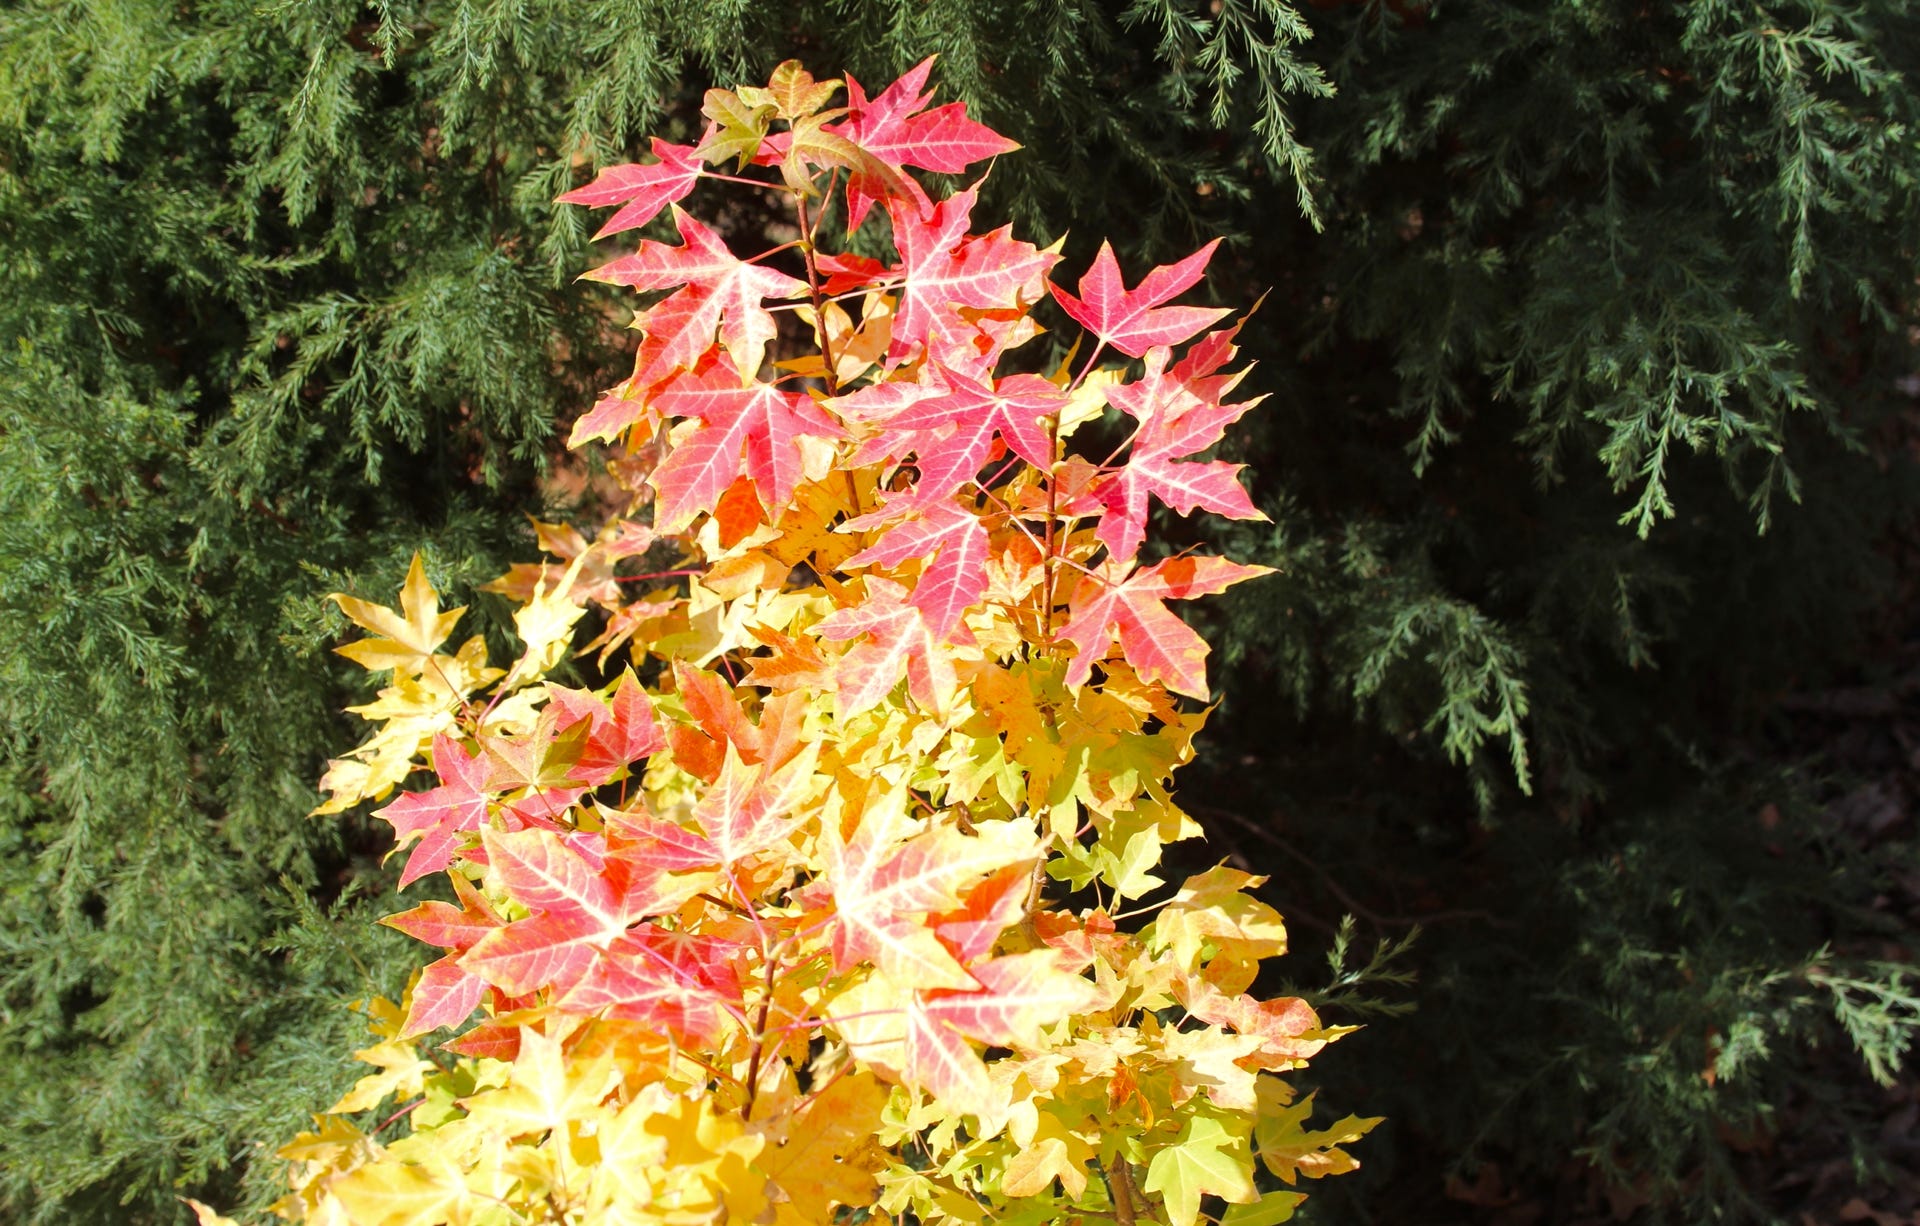 Acer truncatum Shantung maple Shandong maple tree, fall color, bonsai, metro maples, maple leeaves, information on maples